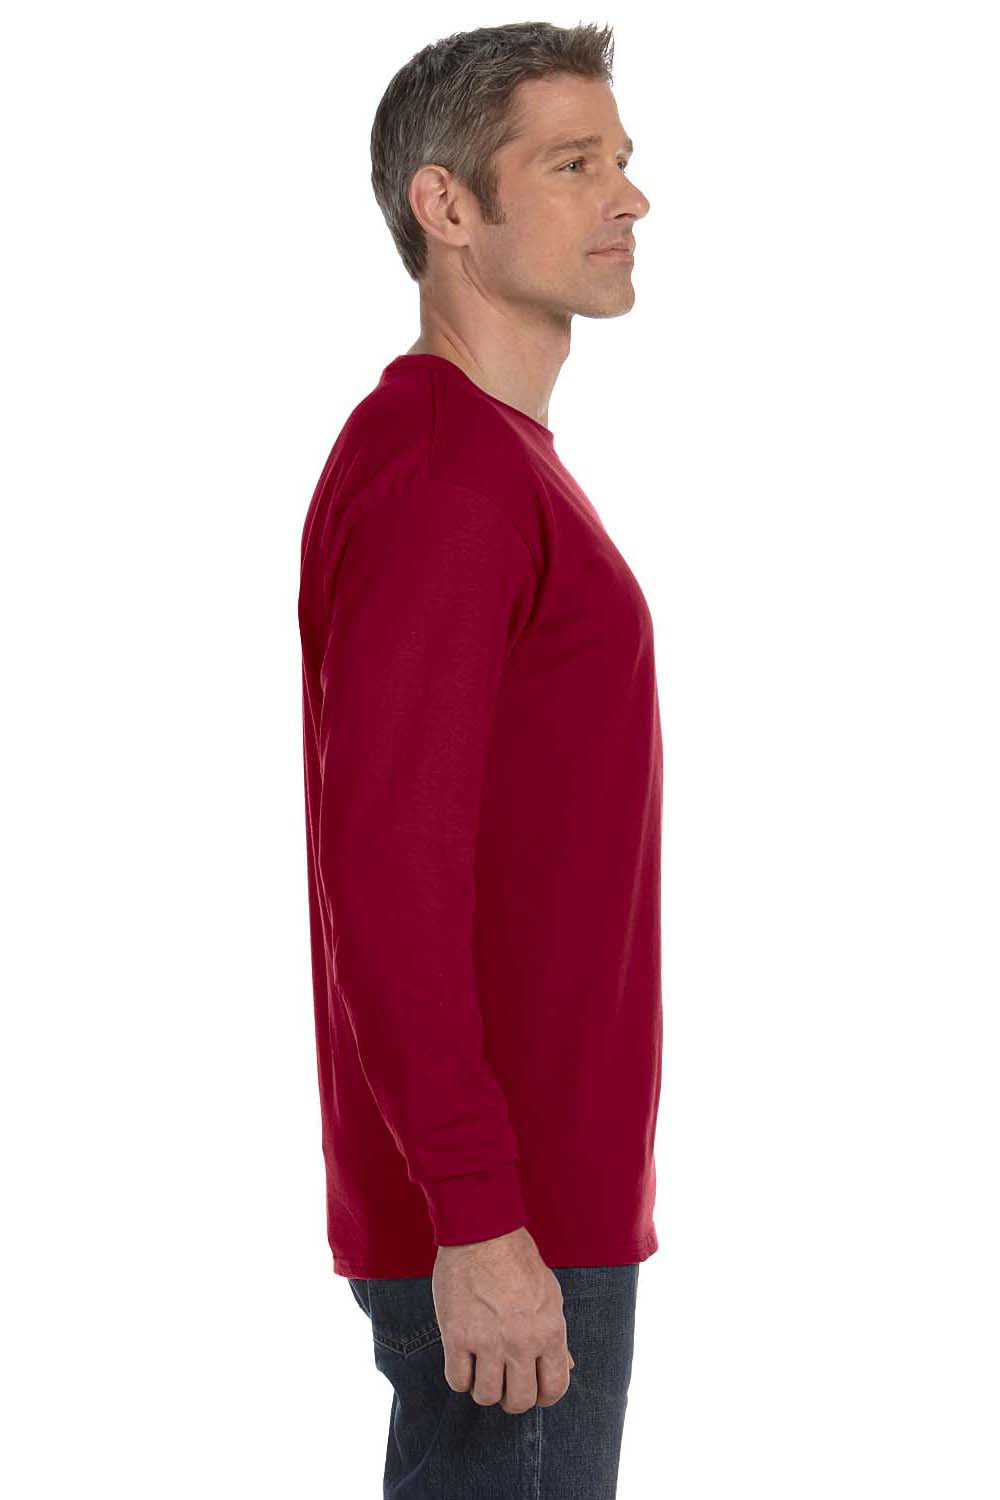 Jerzees 29L Mens Dri-Power Moisture Wicking Long Sleeve Crewneck T-Shirt Cardinal Red Side